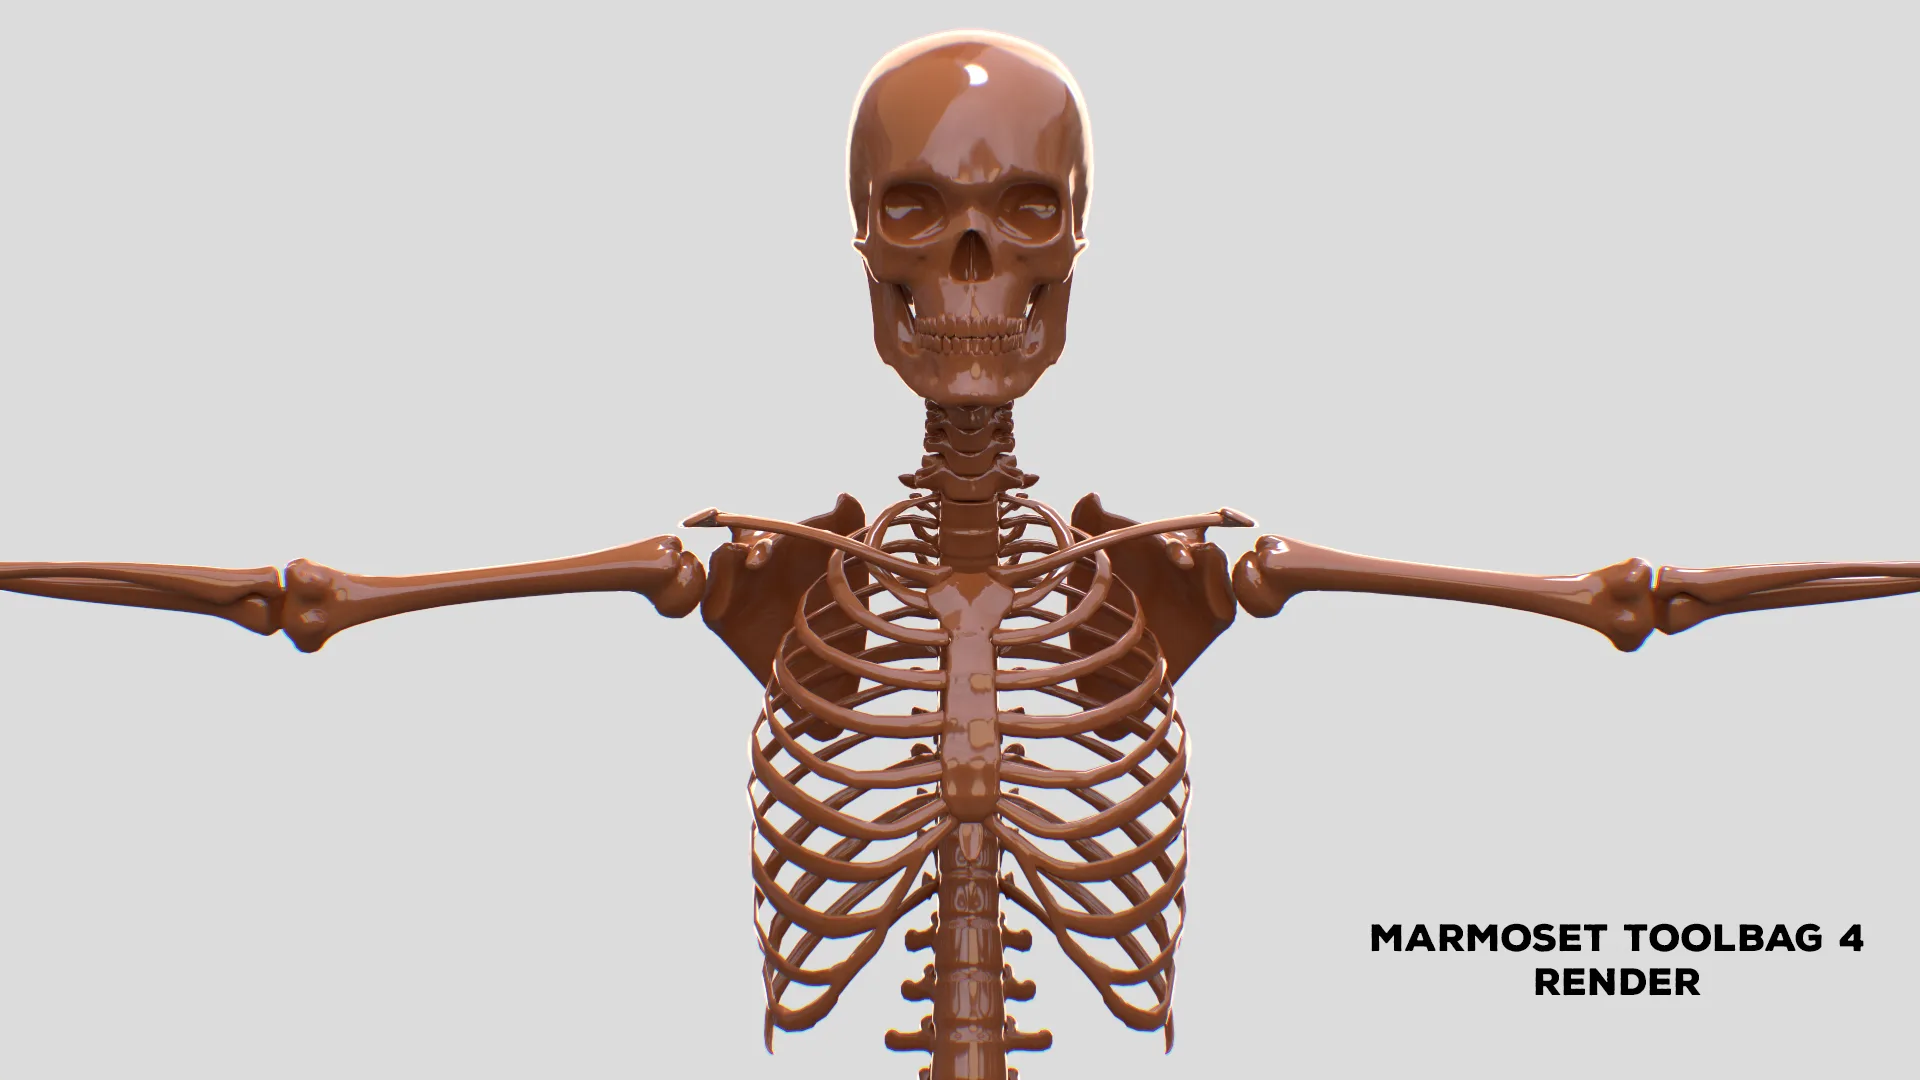 Realistic Human Male Skeleton